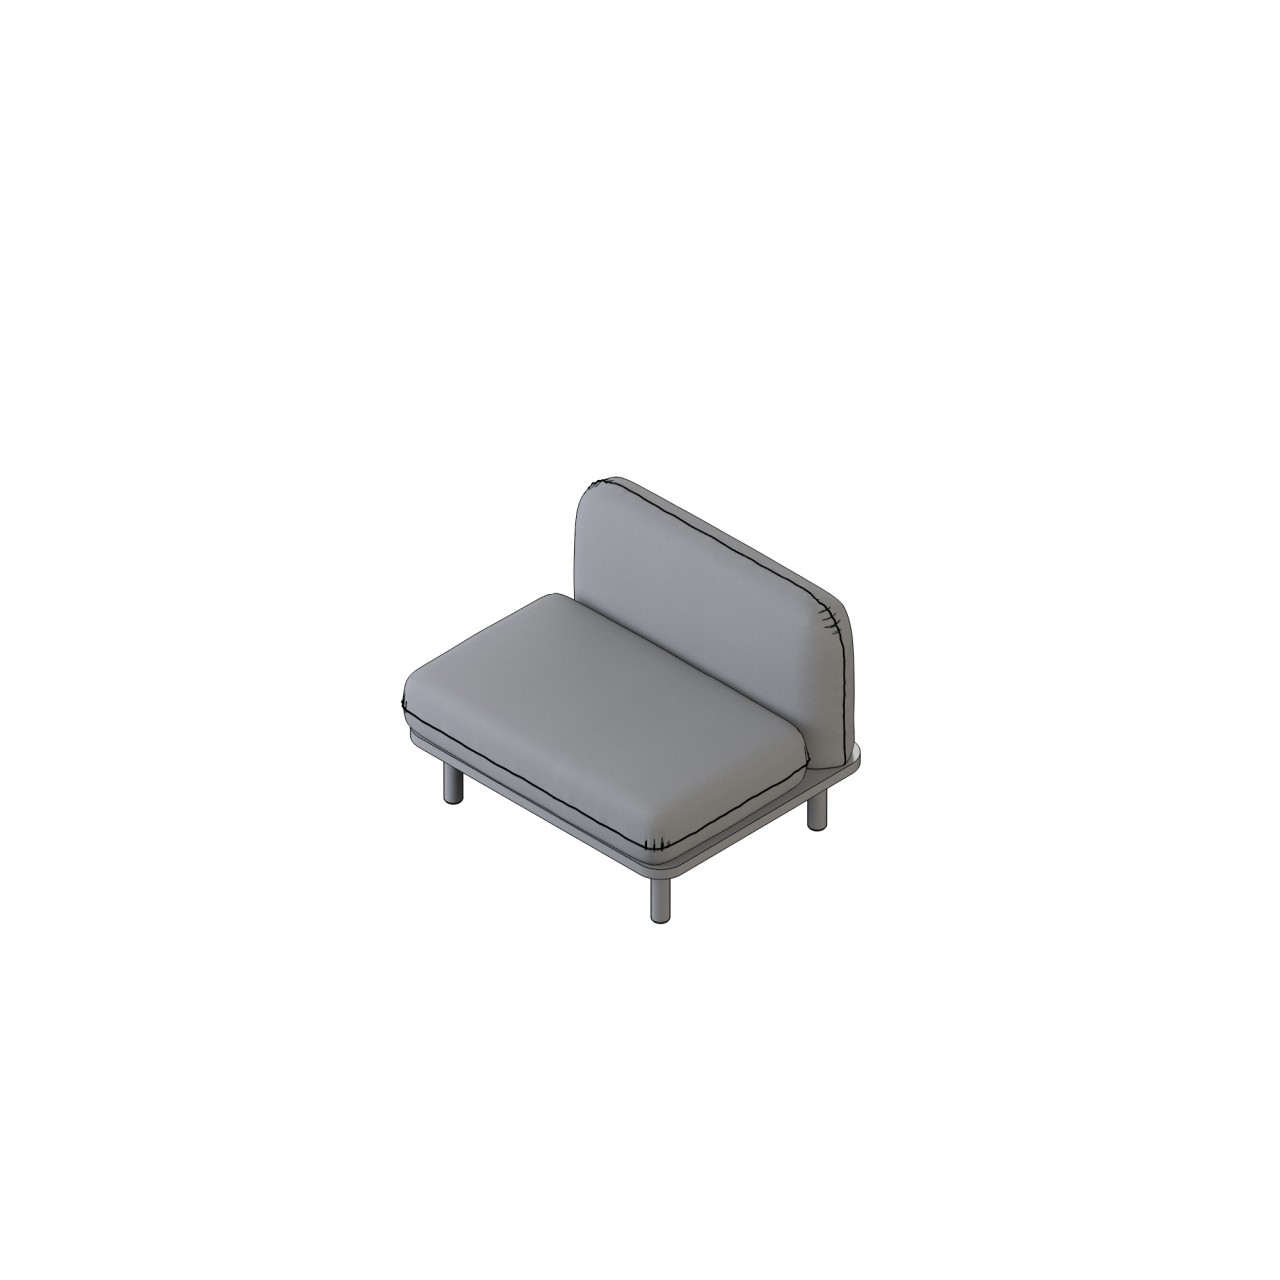 soft banquettes - 24003
COM 5
(back 1.75)
(base 1)
(seat 2.75)